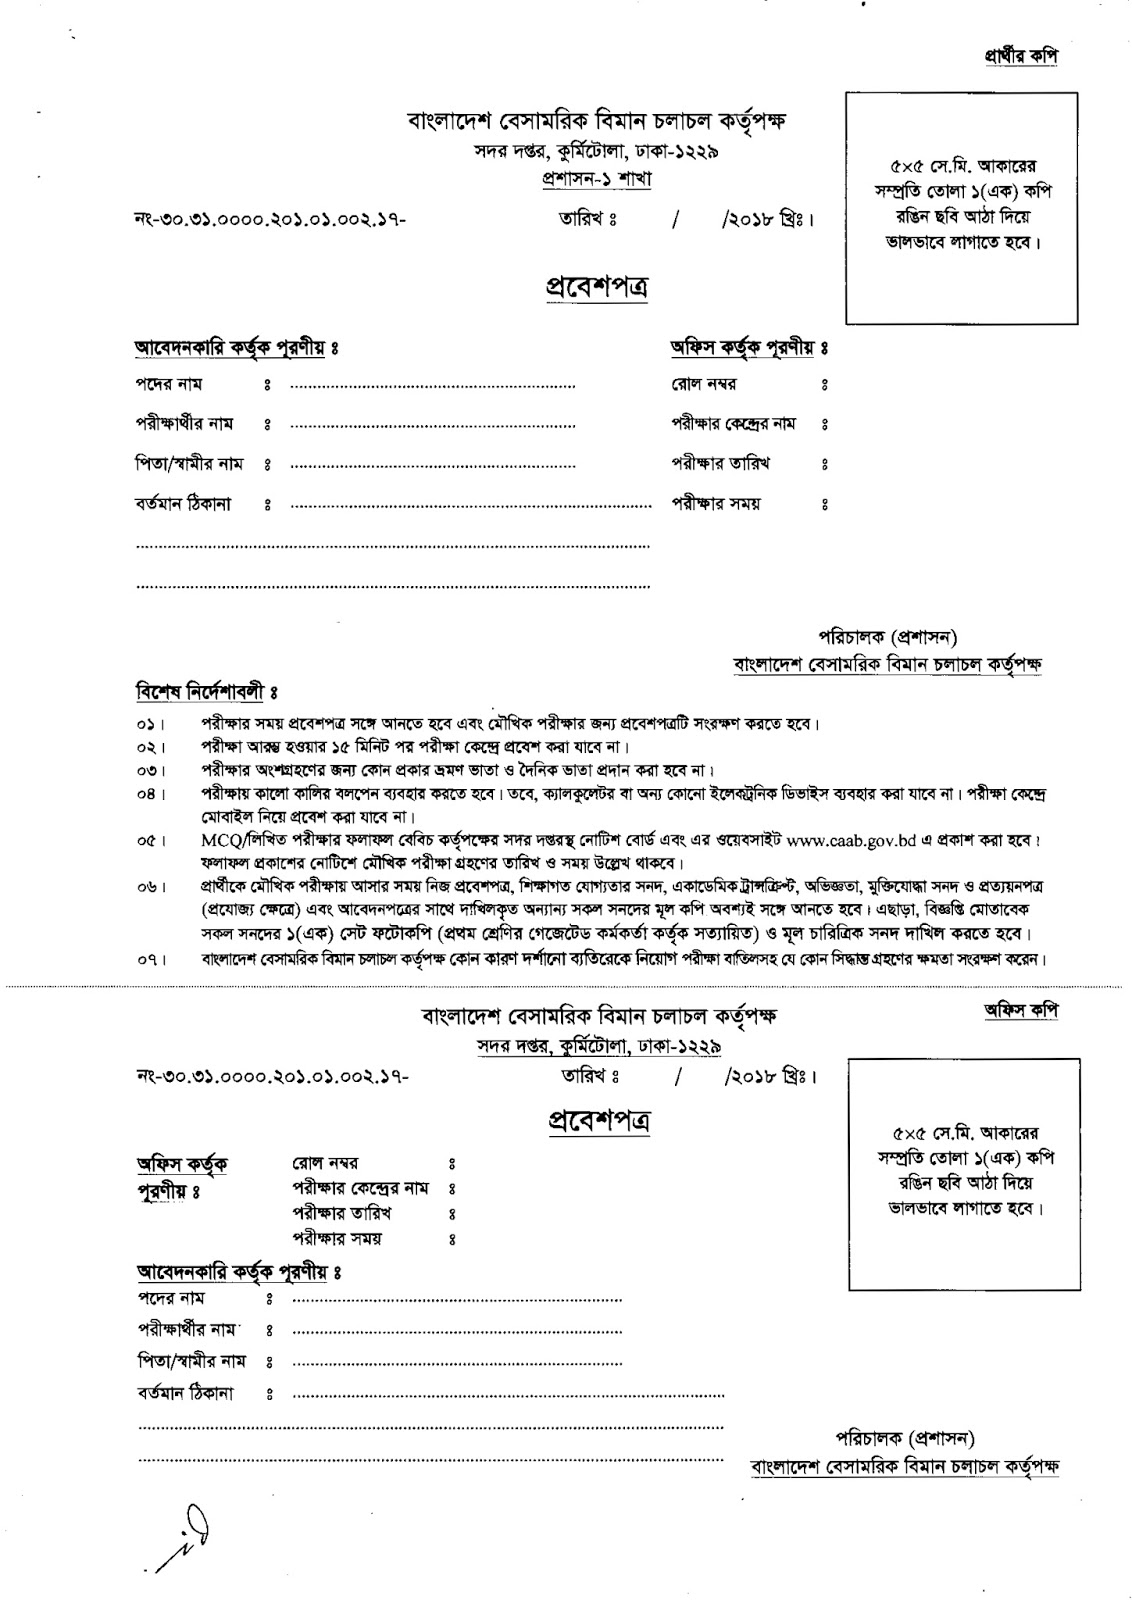 Civil Aviation Authority of Bangladesh (Caab) Job Admit Card Form: